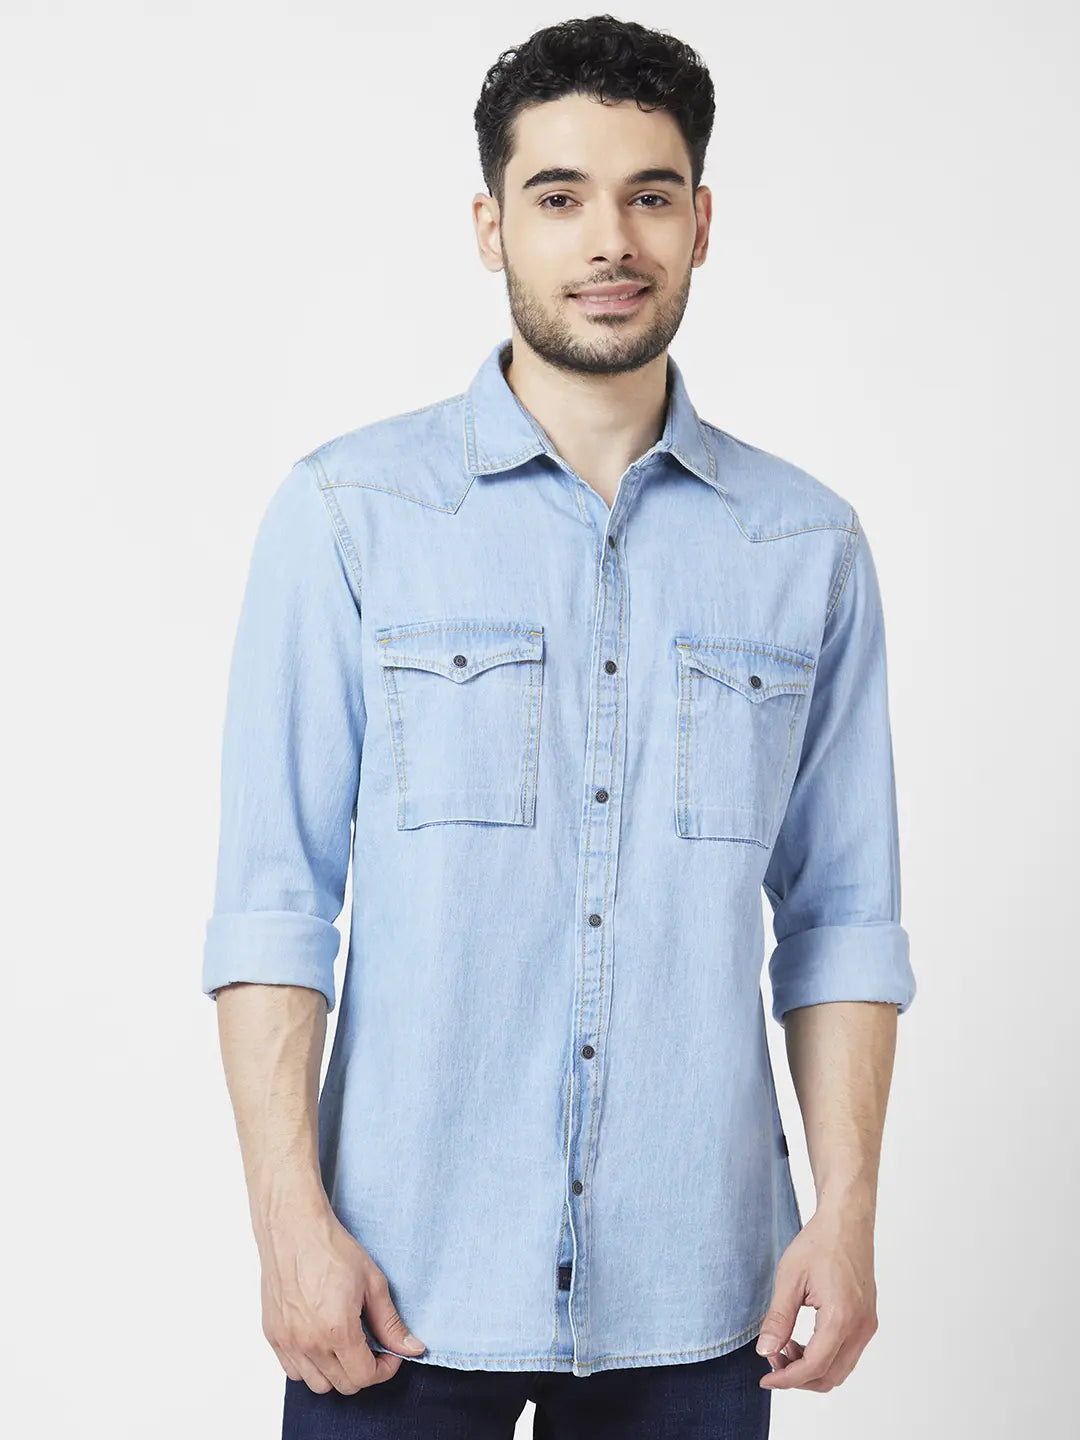 Ben Martin Men's Regular Fit Mandarin Collar Full Sleeve Light Blue Denim  Shirt, XL : Amazon.in: Clothing & Accessories